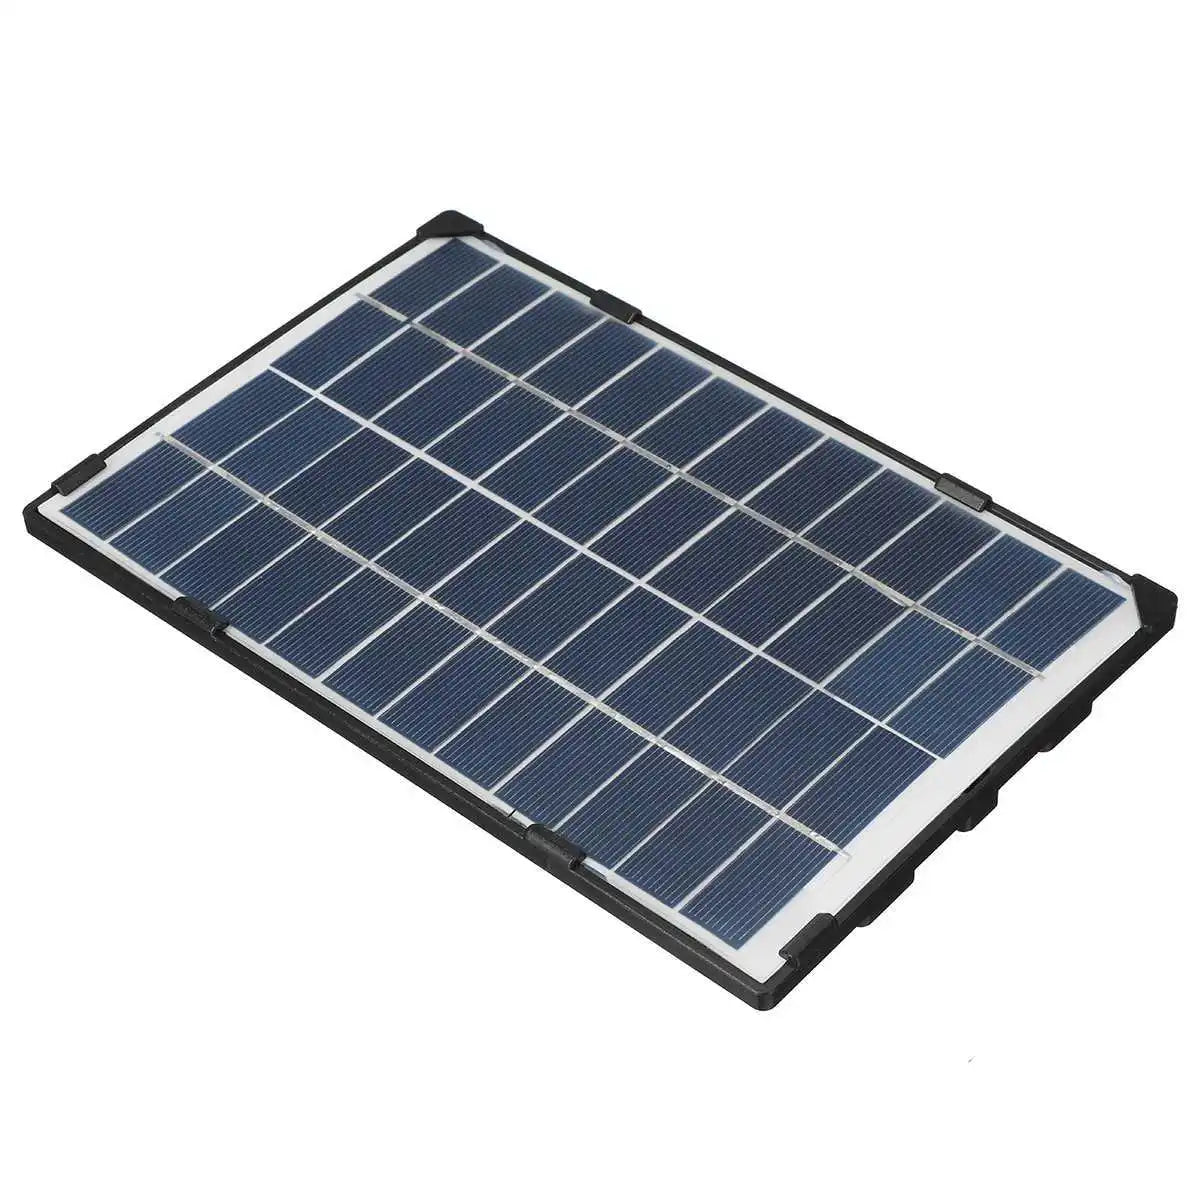 30W Portable Solar Panel, 